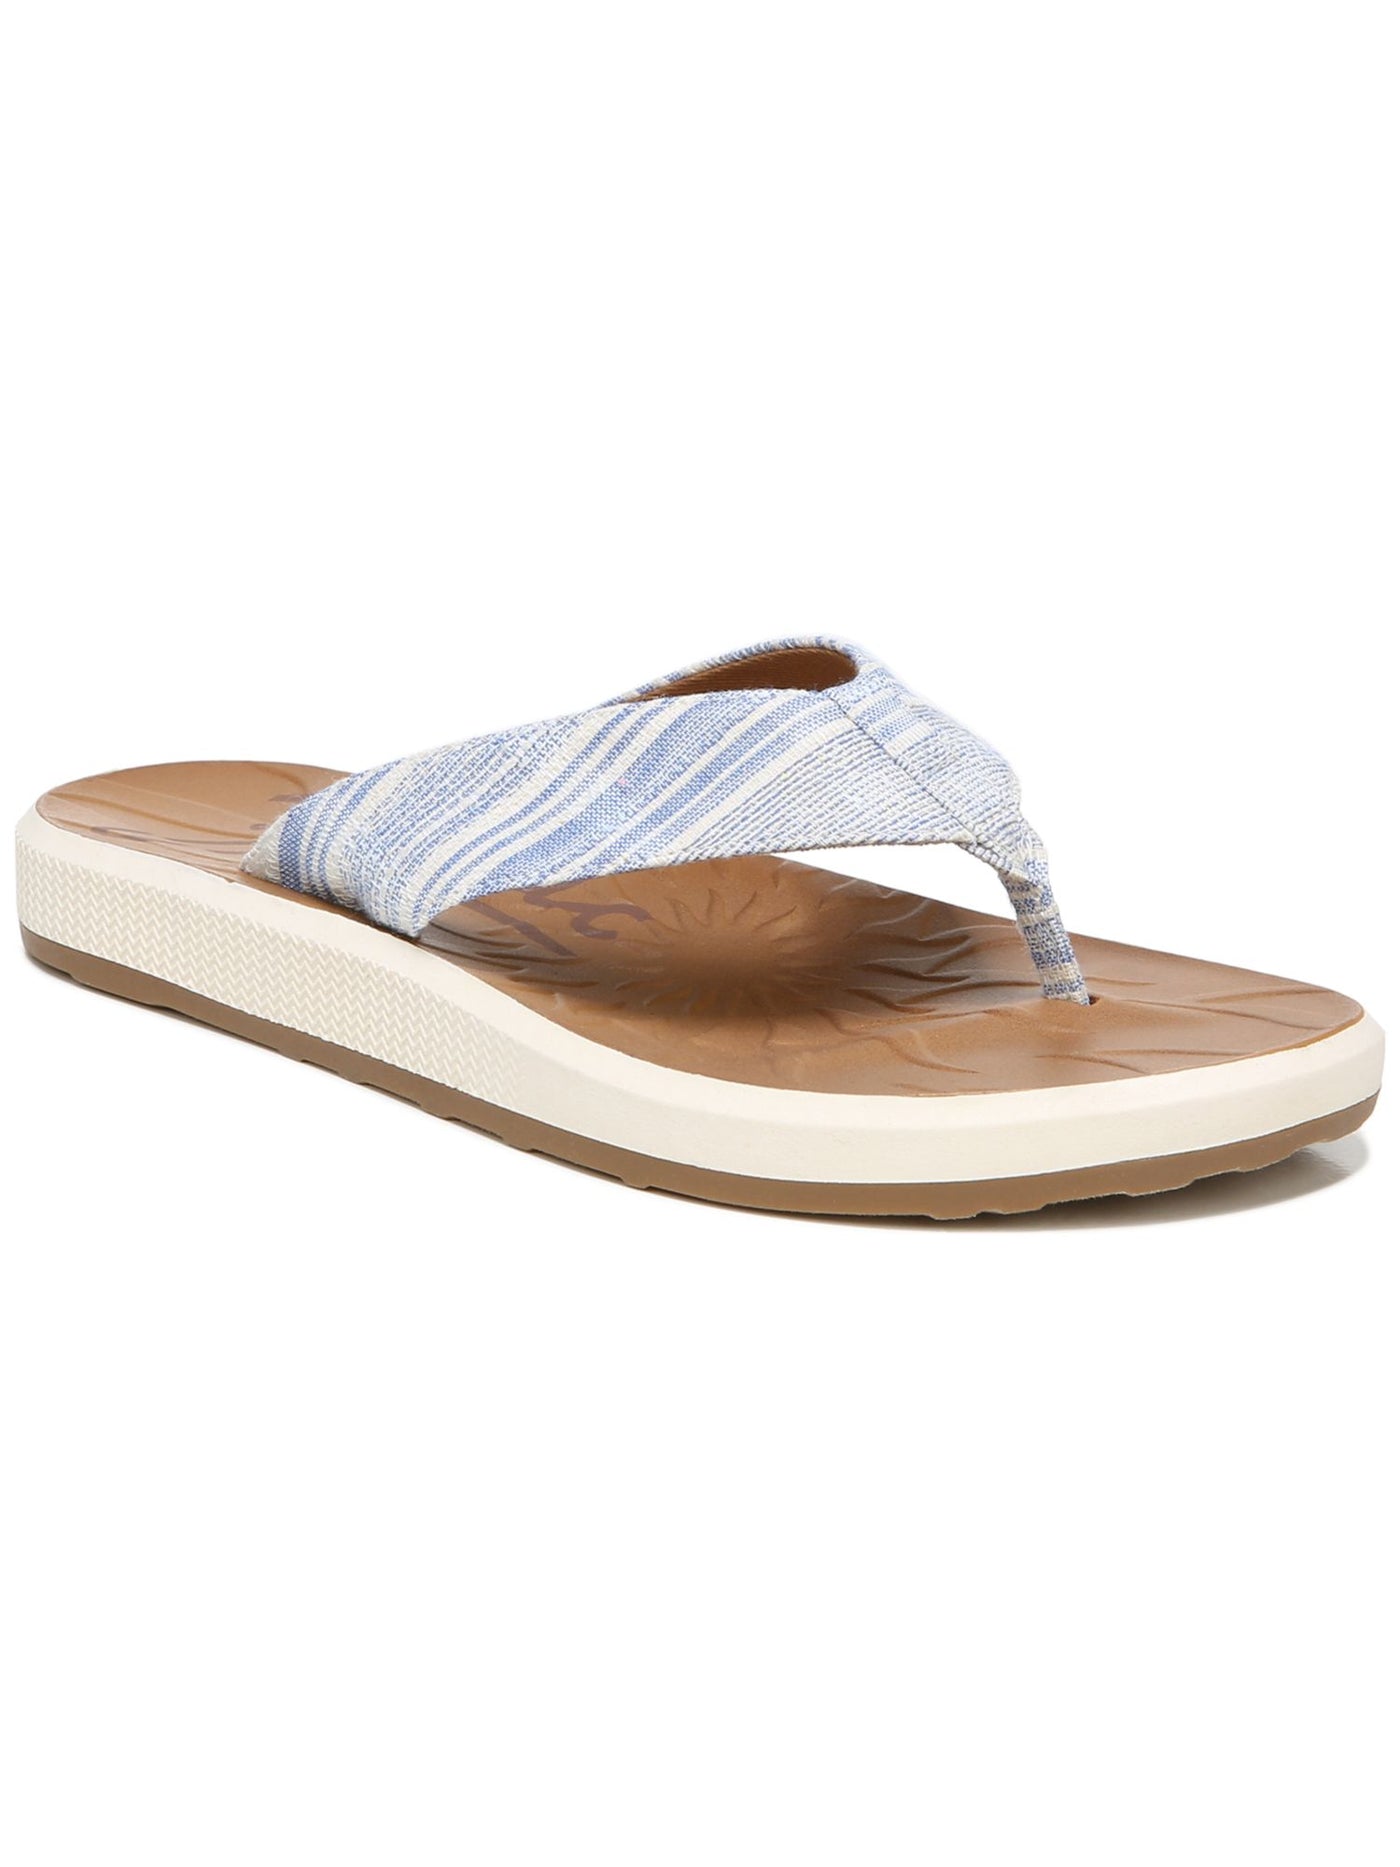 ZODIAC Womens Blue Striped Sunny Round Toe Slip On Flip Flop Sandal 10 M